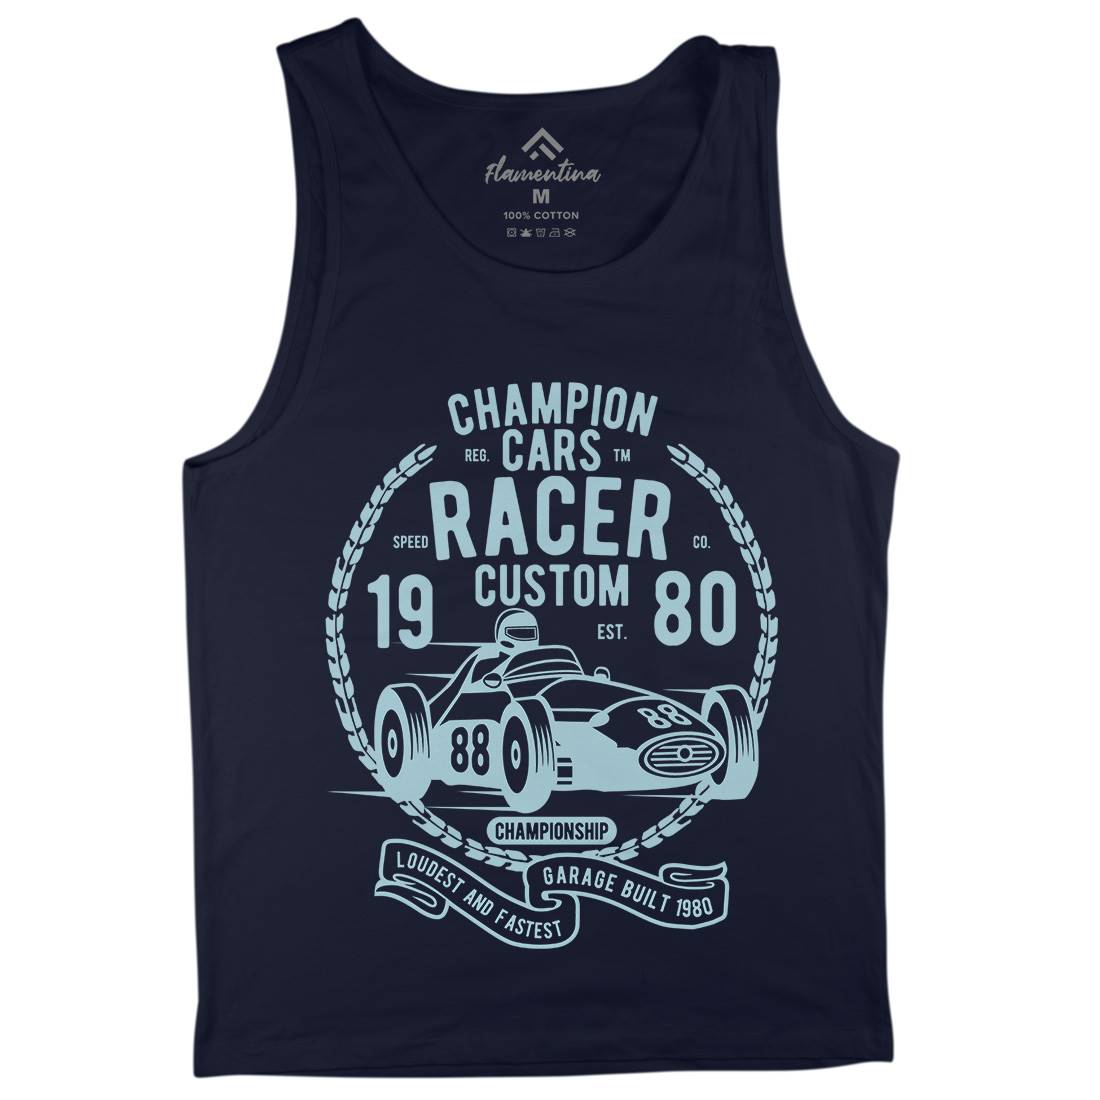 Champion Cars Racer Mens Tank Top Vest Cars B395